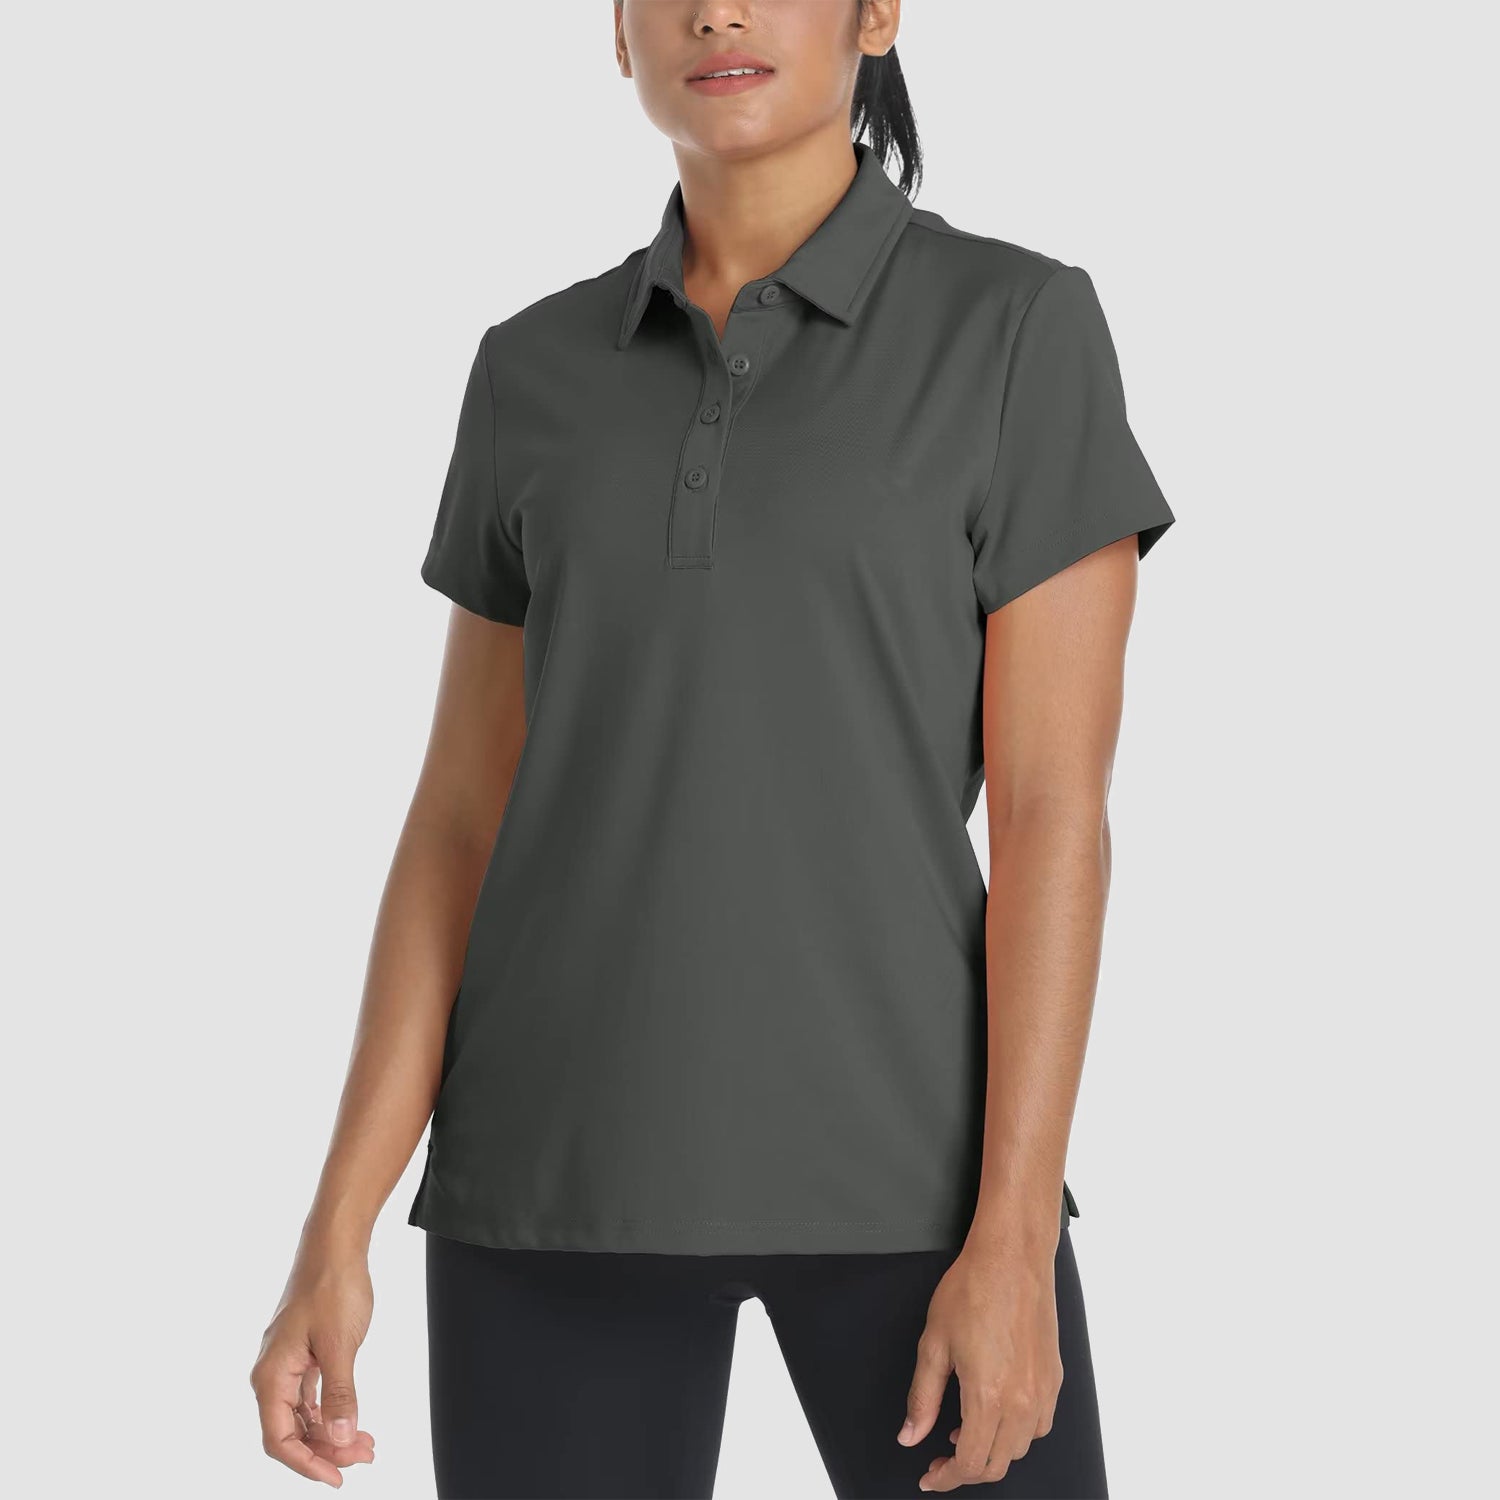 Women's Polo Shirts 4 Buttons Casual T-Shirts Quick Dry Short Sleeve Golf Shirt